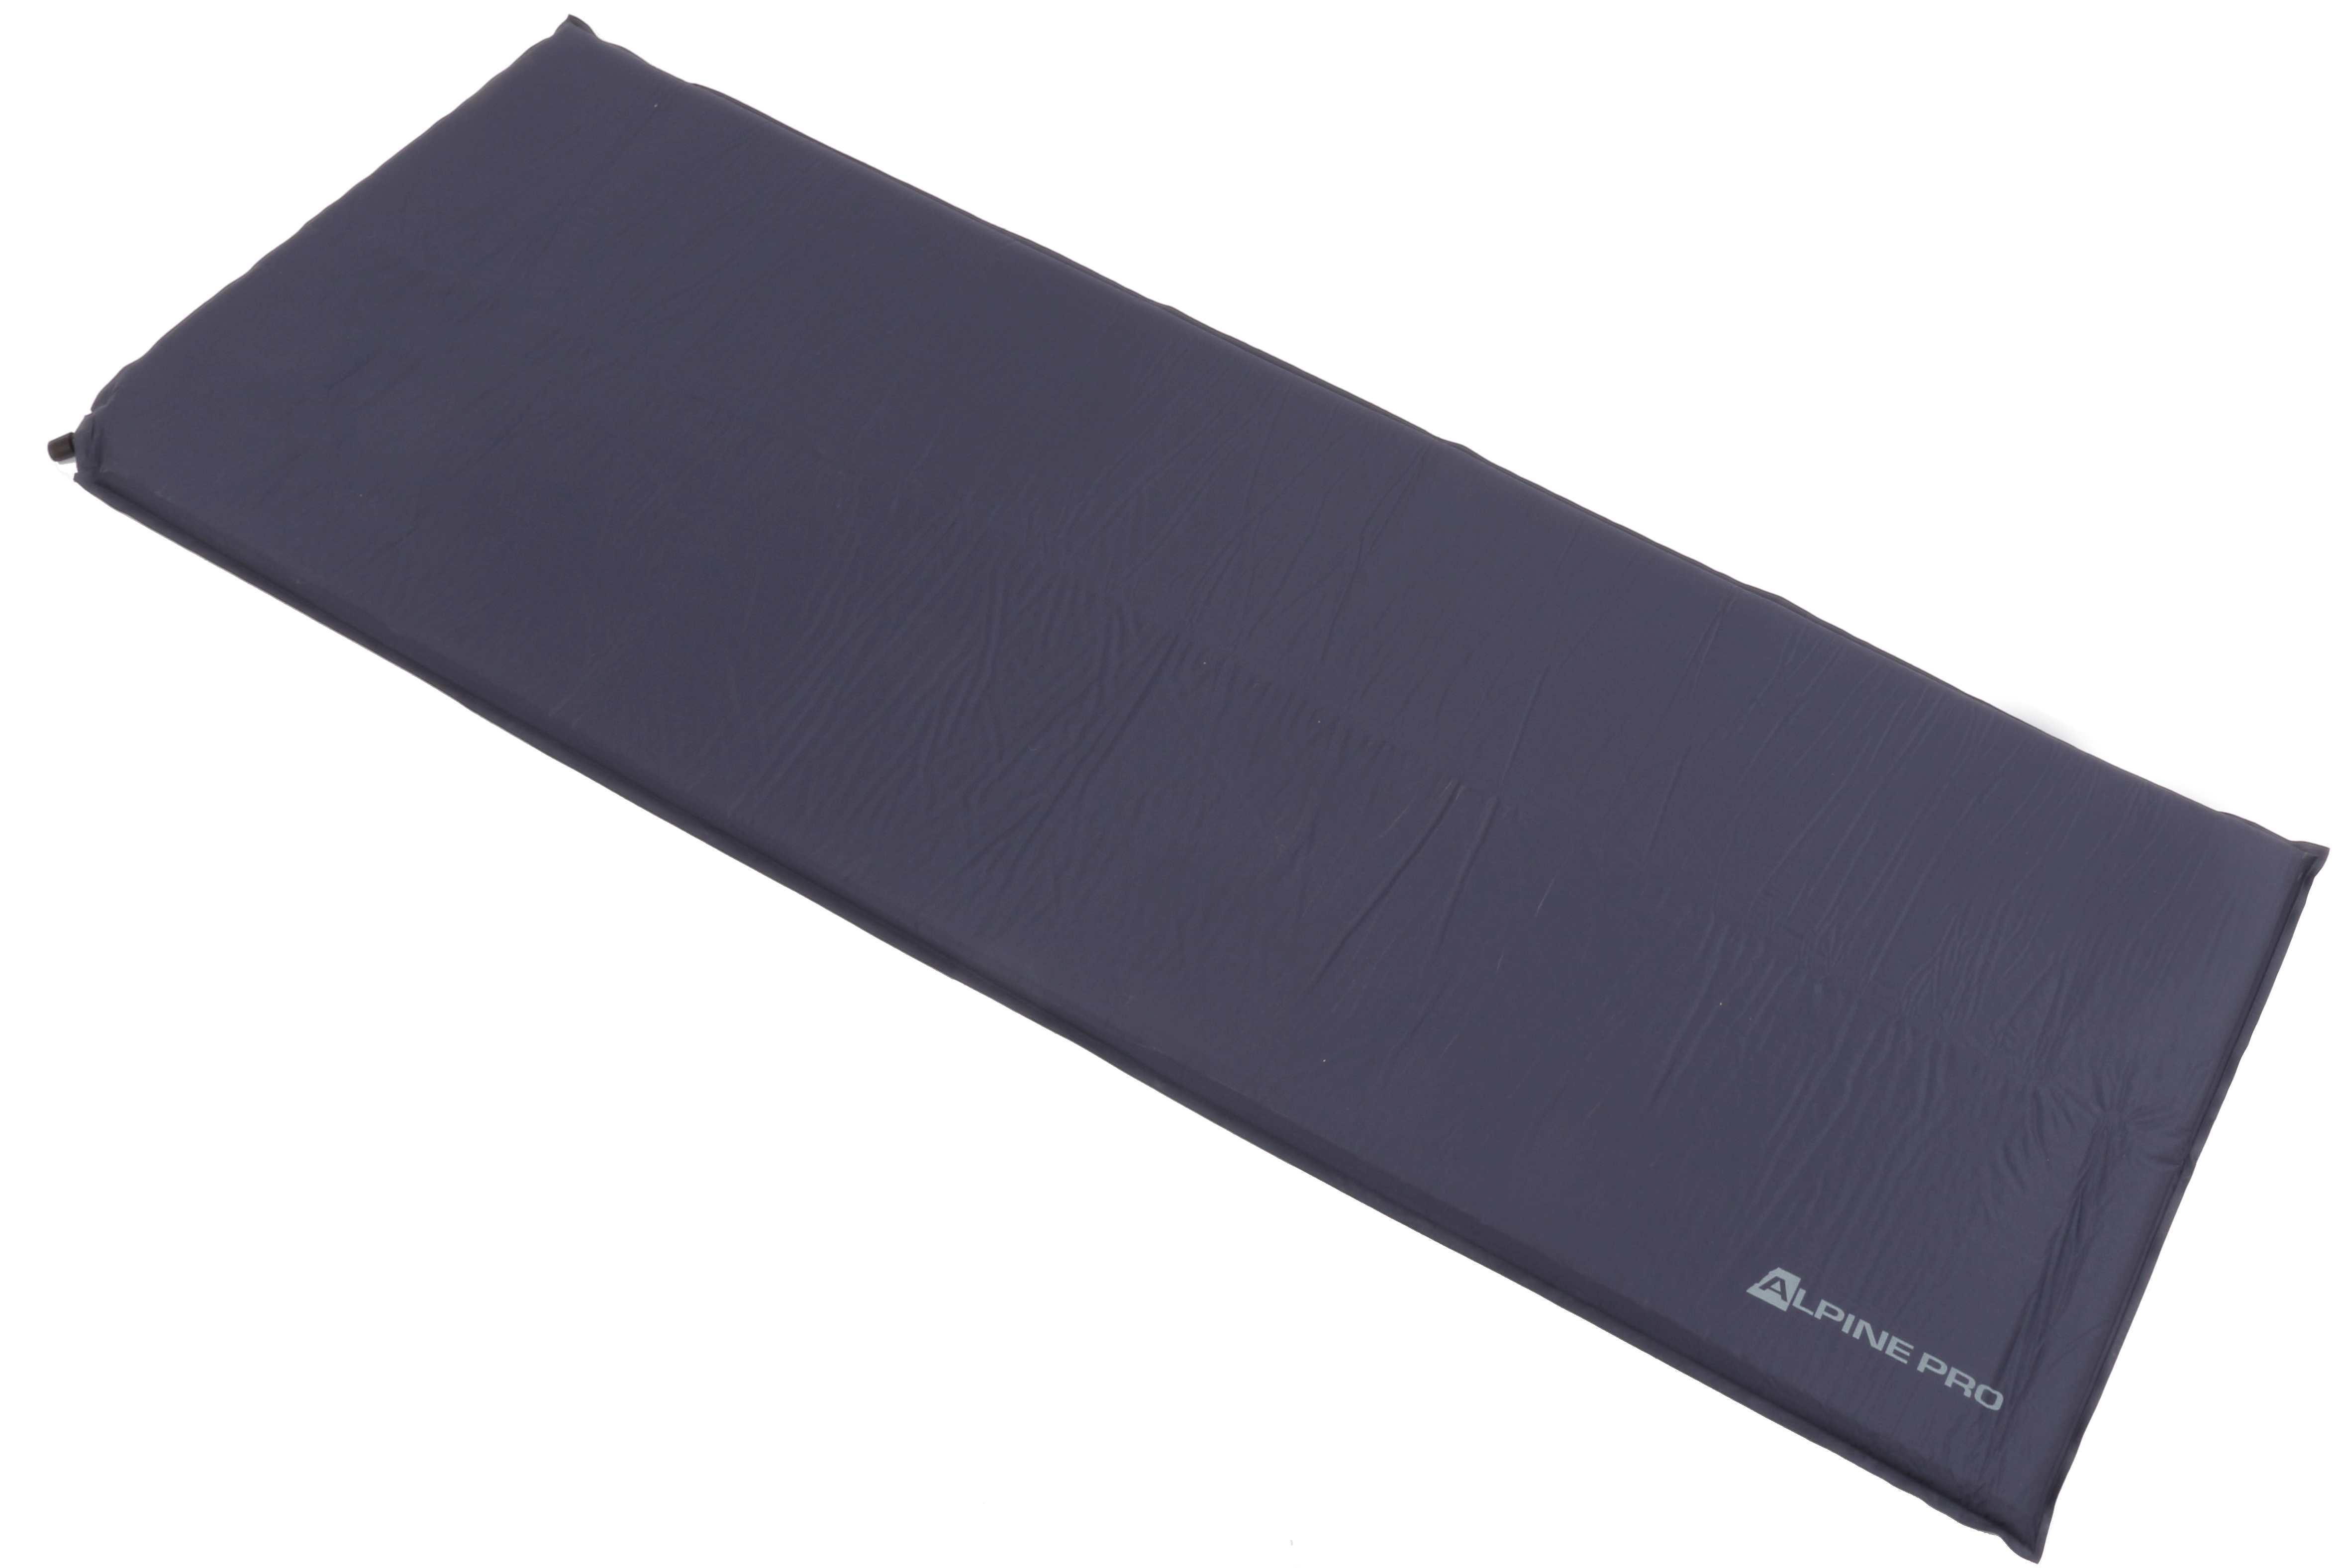 Self-inflating sleeping pad